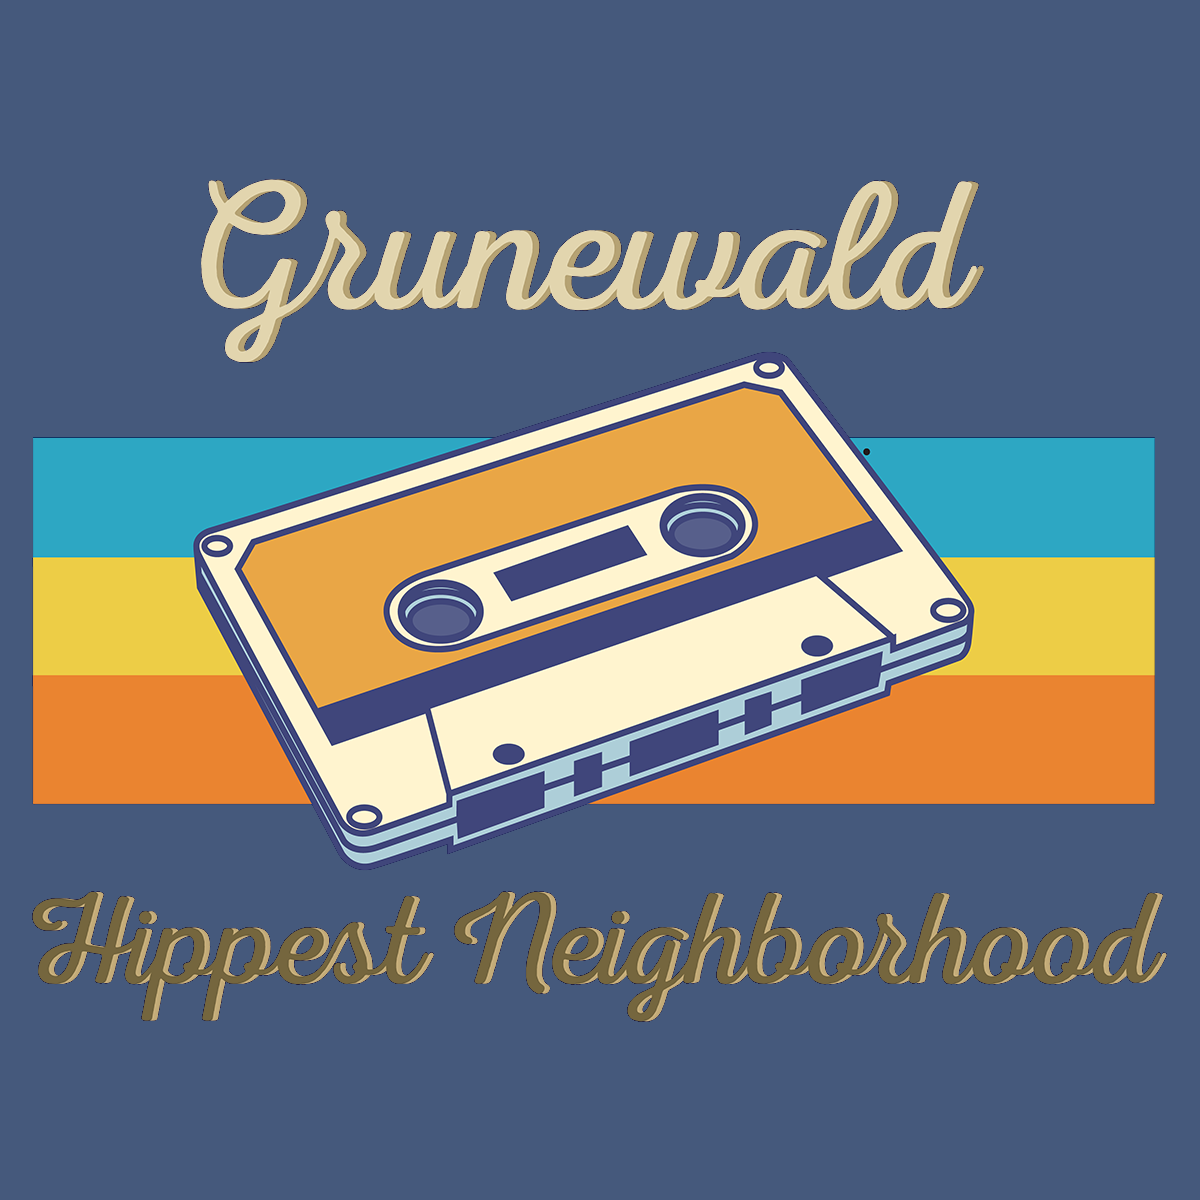 Grunewald Hippest Neighborhood